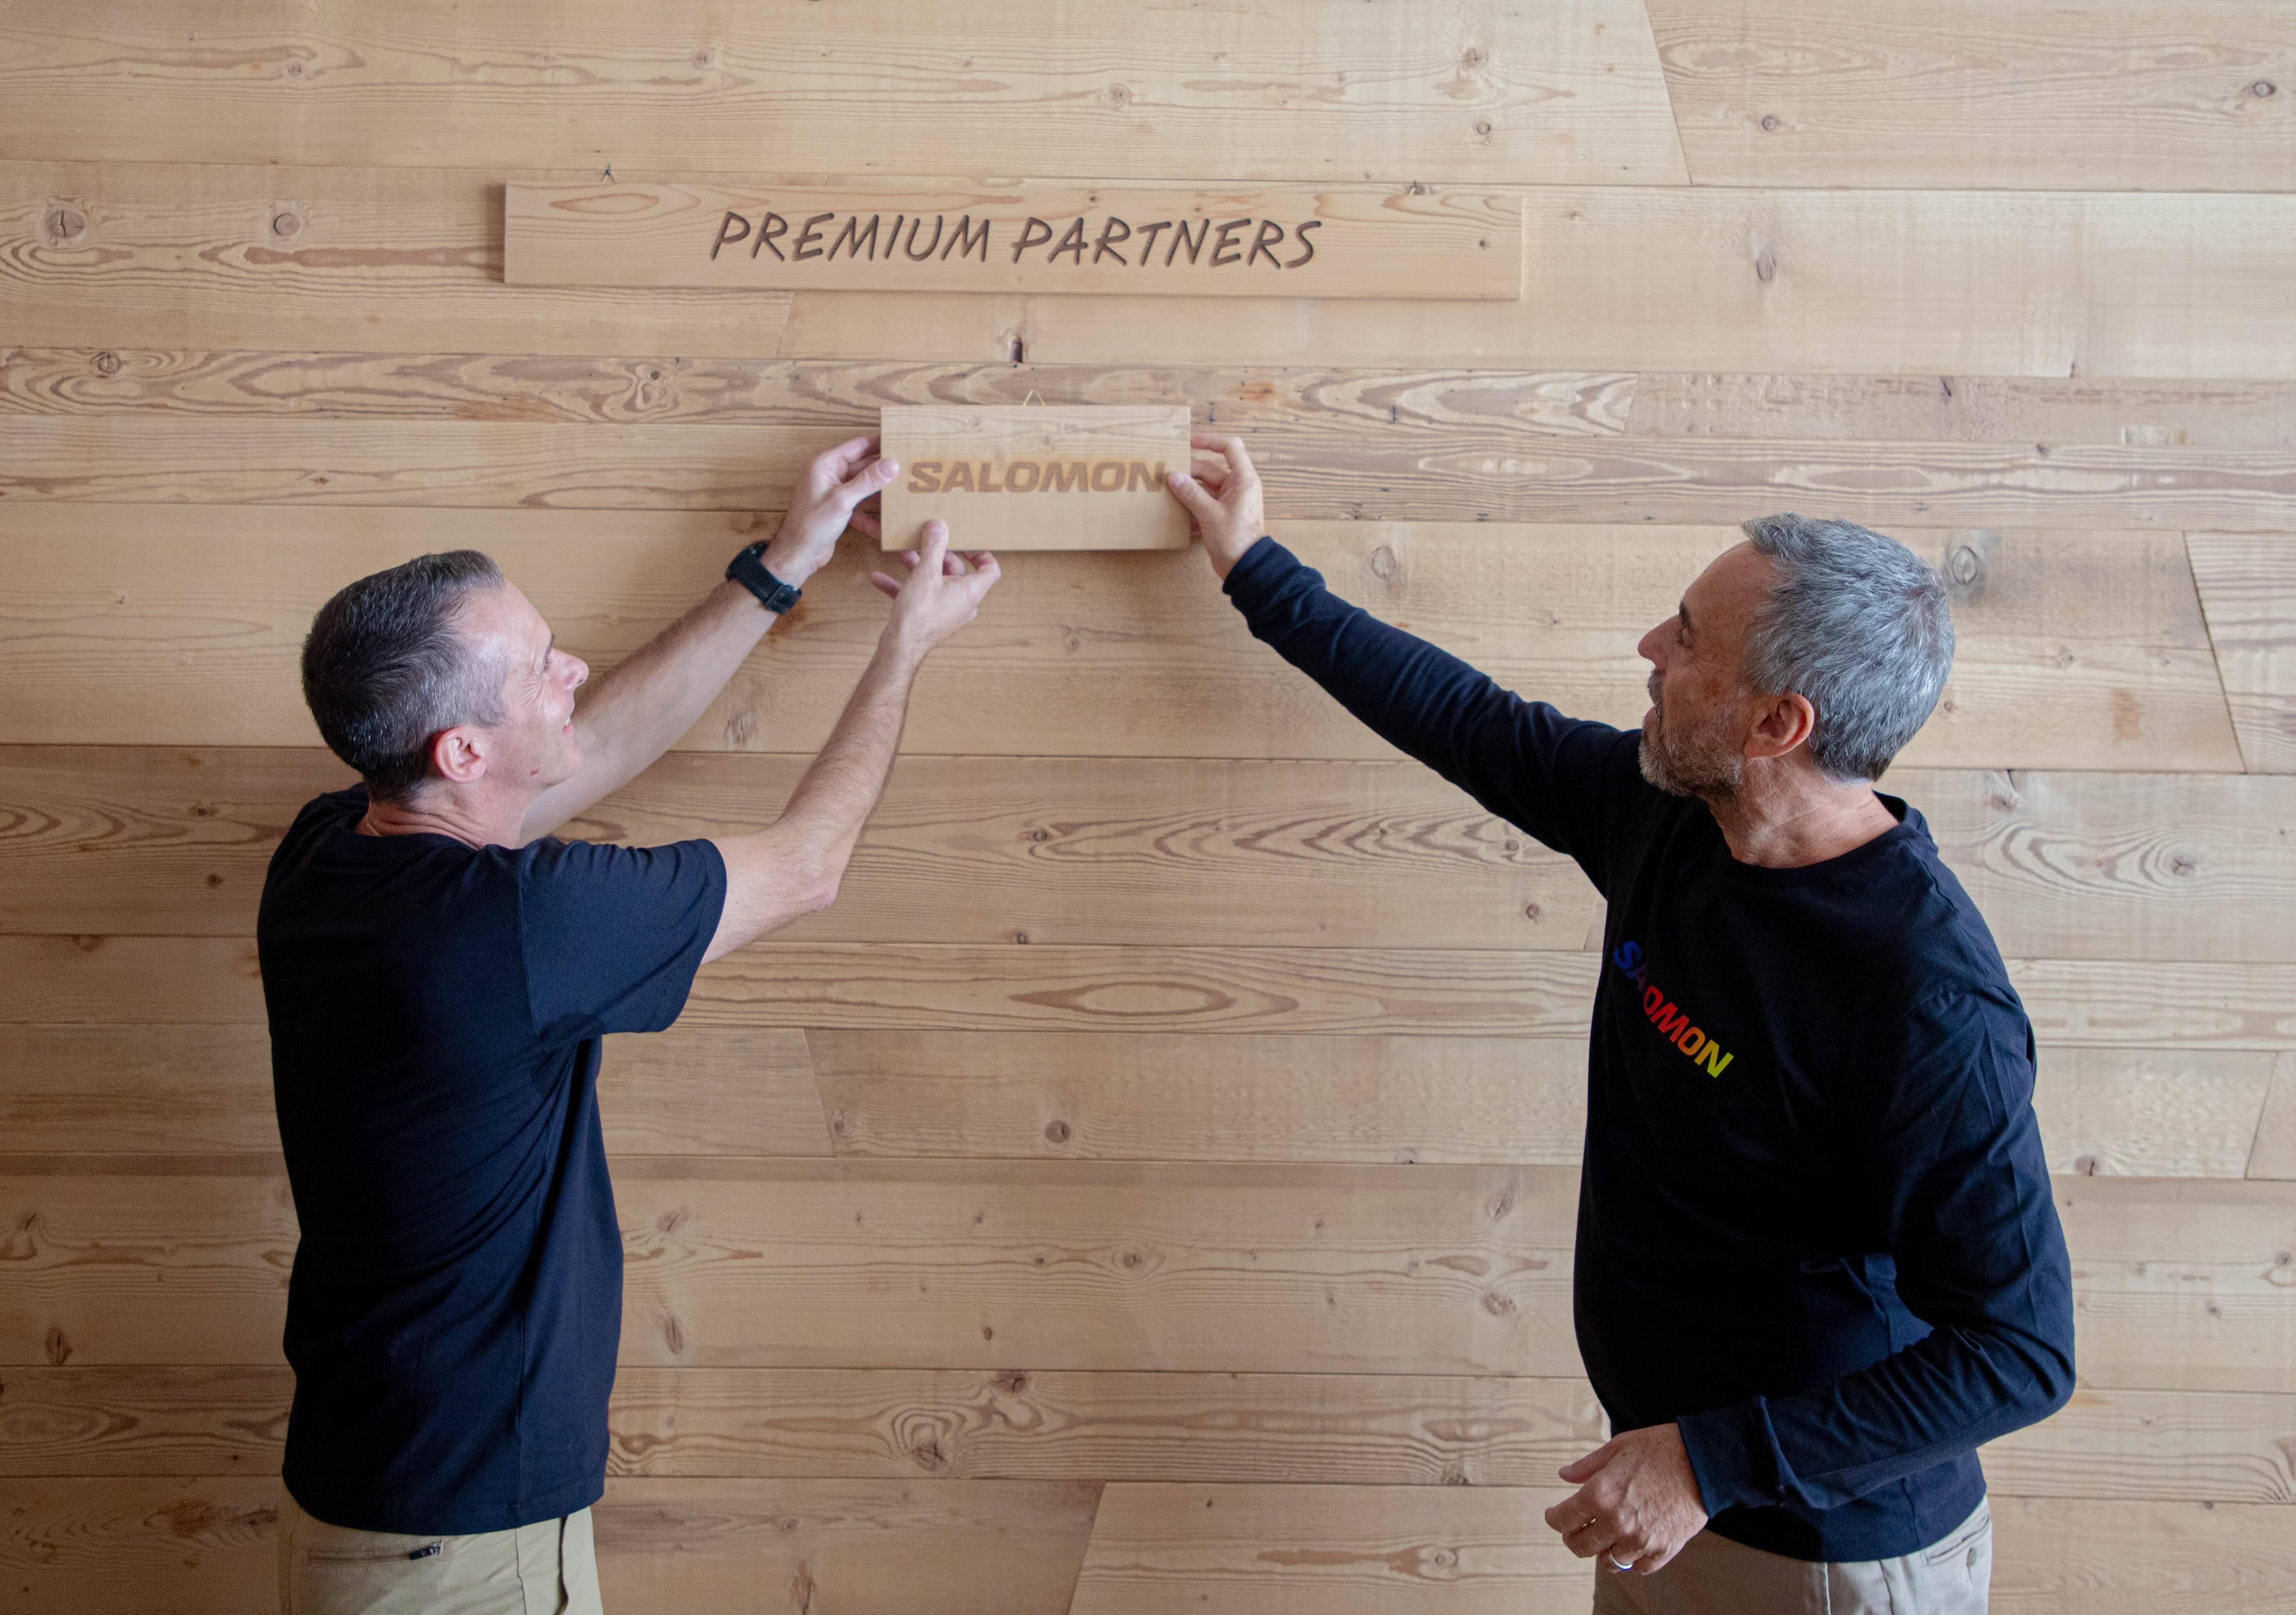 Photo of Varnier and Franco Fogliato applying the 'Salomon' plaque in the partnership wall